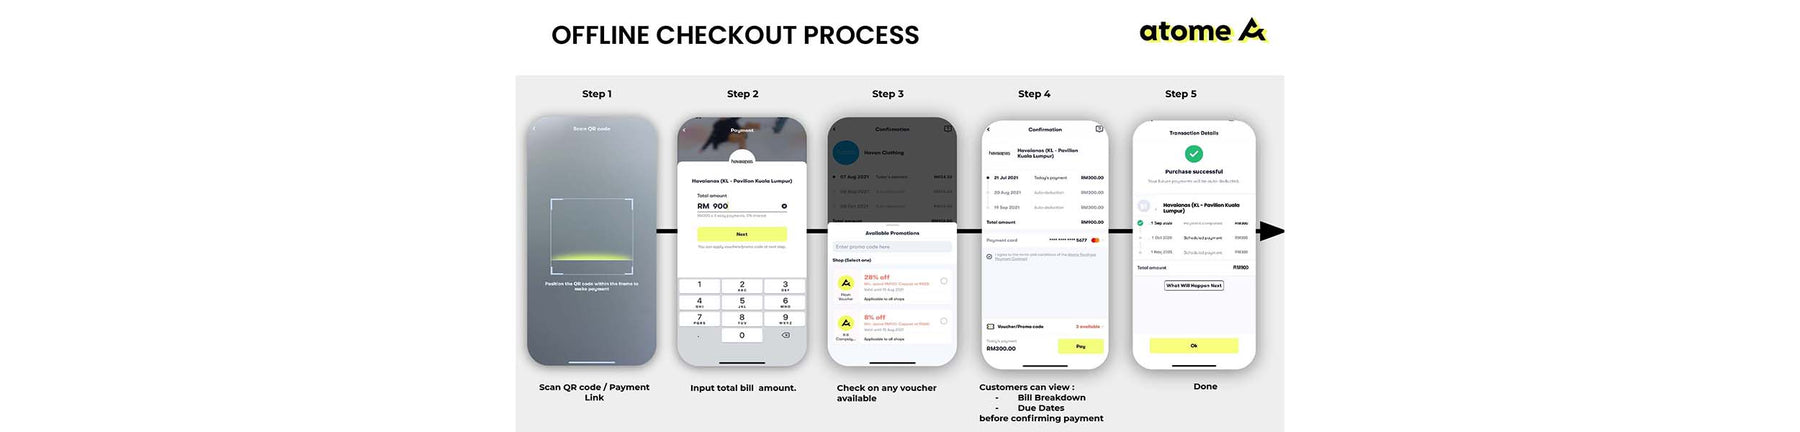 Atome offline checkout process